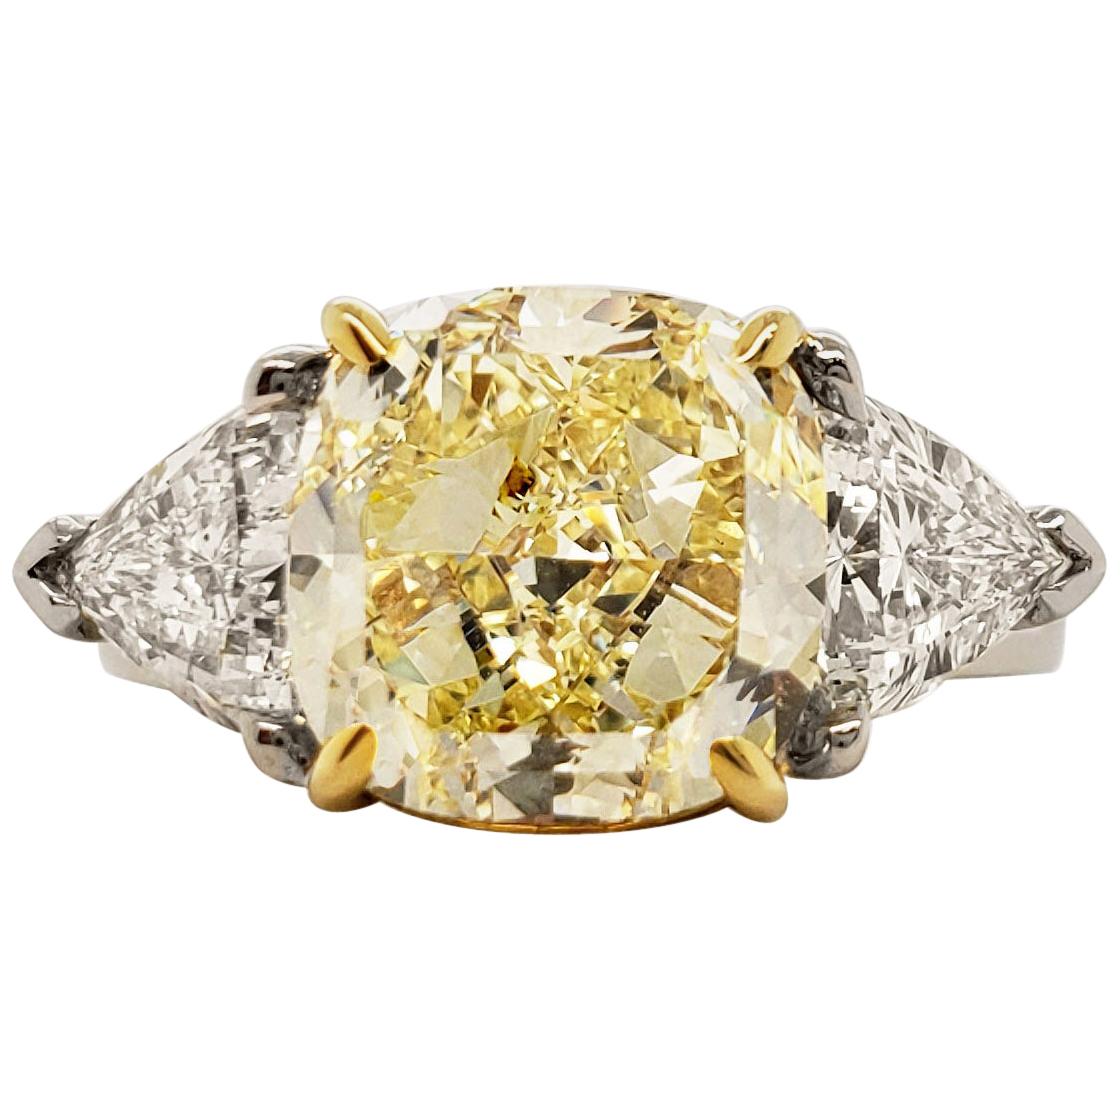 Scarselli 5 Carat Fancy Yellow Cushion Cut 'VS2' Diamond Ring in Platinum GIA